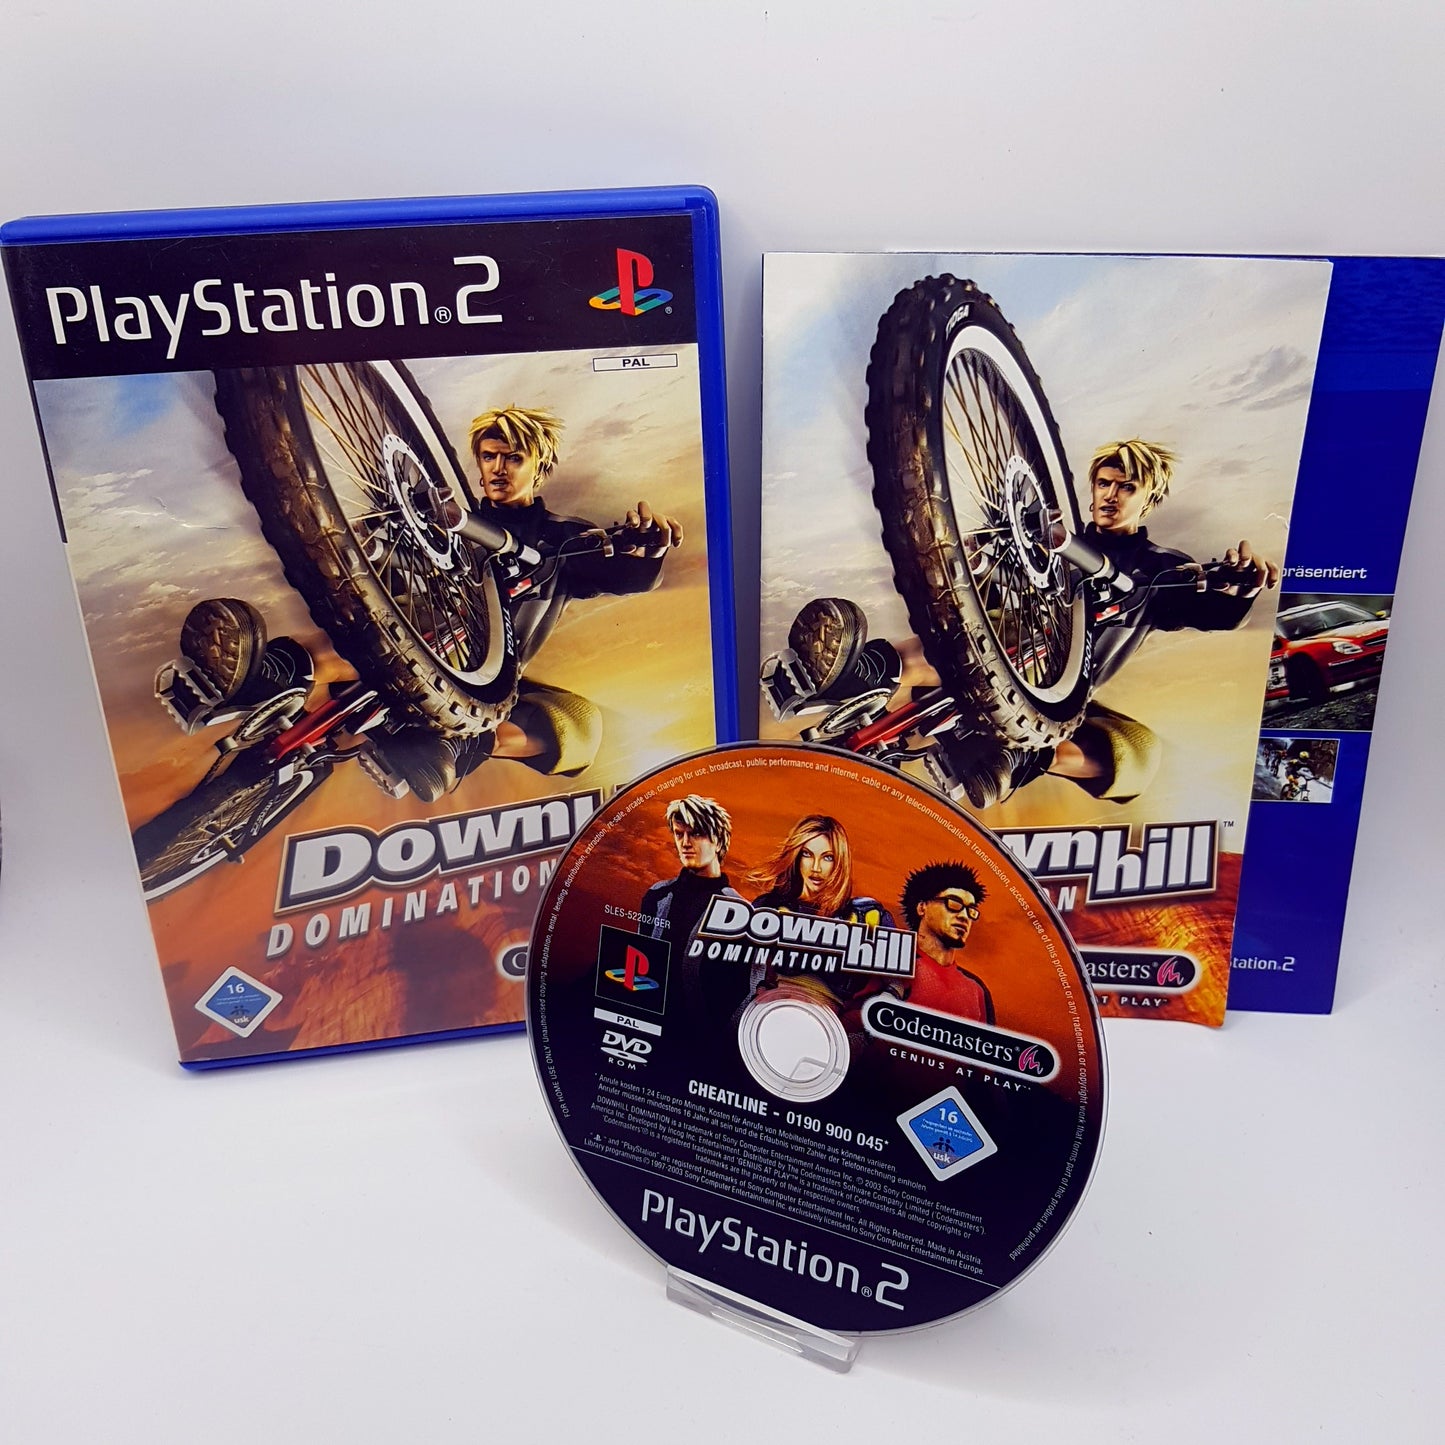 Playstation 2 Ps2 - Downhill Domination - gebraucht